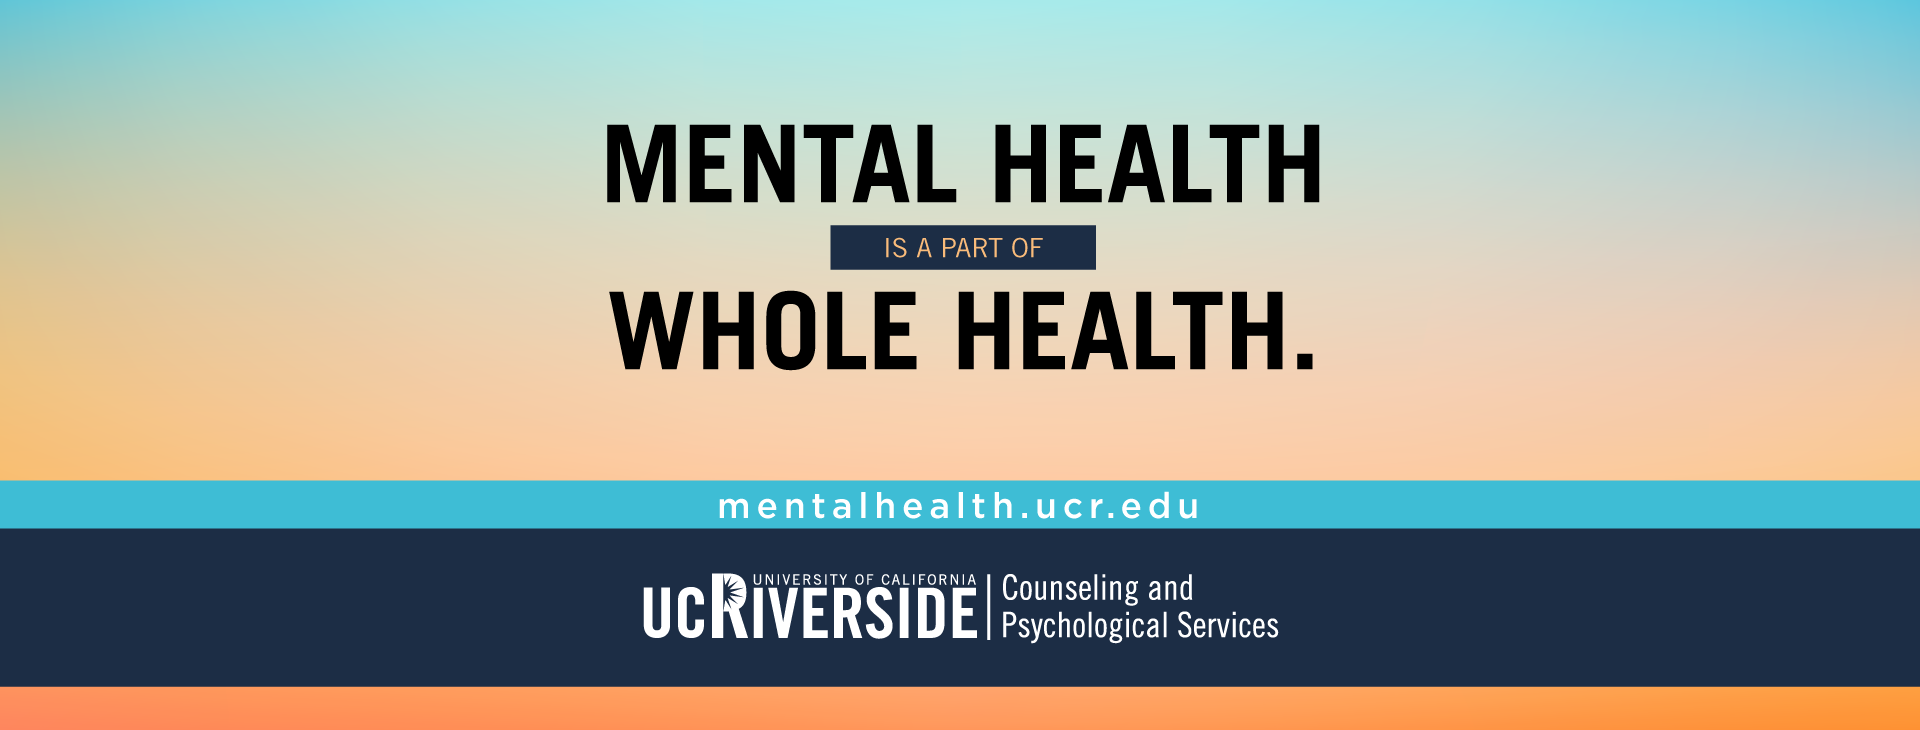 Mental Health is Whole Health | mentalhealth.ucr.edu